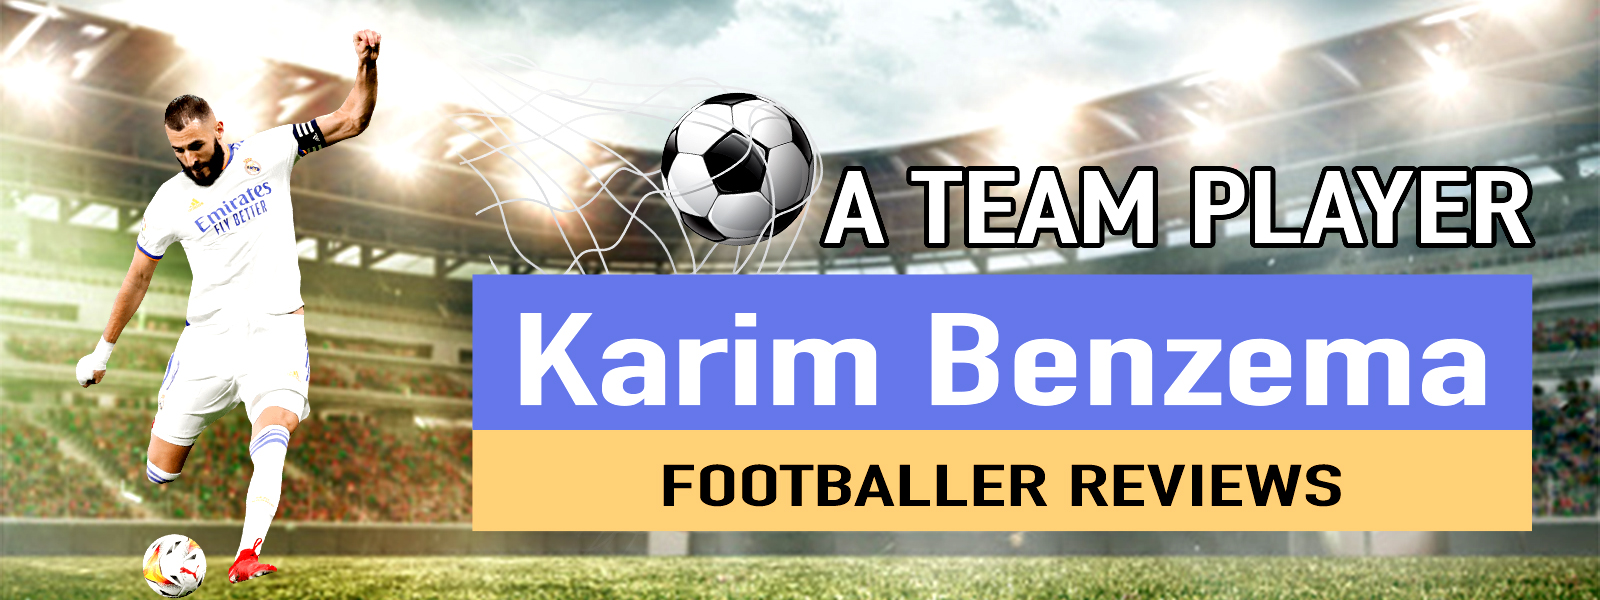 Karim Benzema - Real Madrid Forward